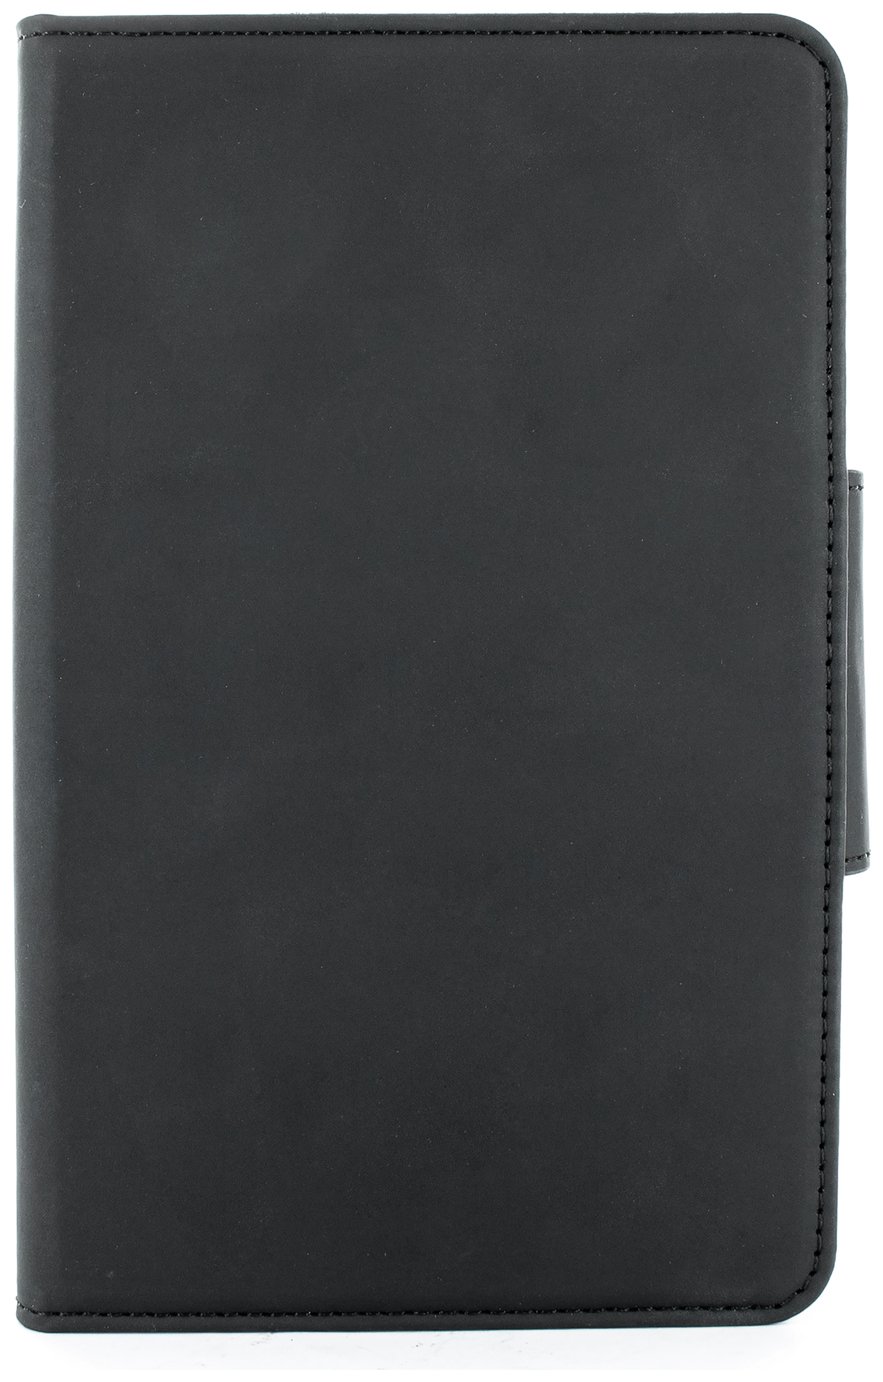 Proporta Samsung Tab A 10.5 Inch Tablet Cover - Black